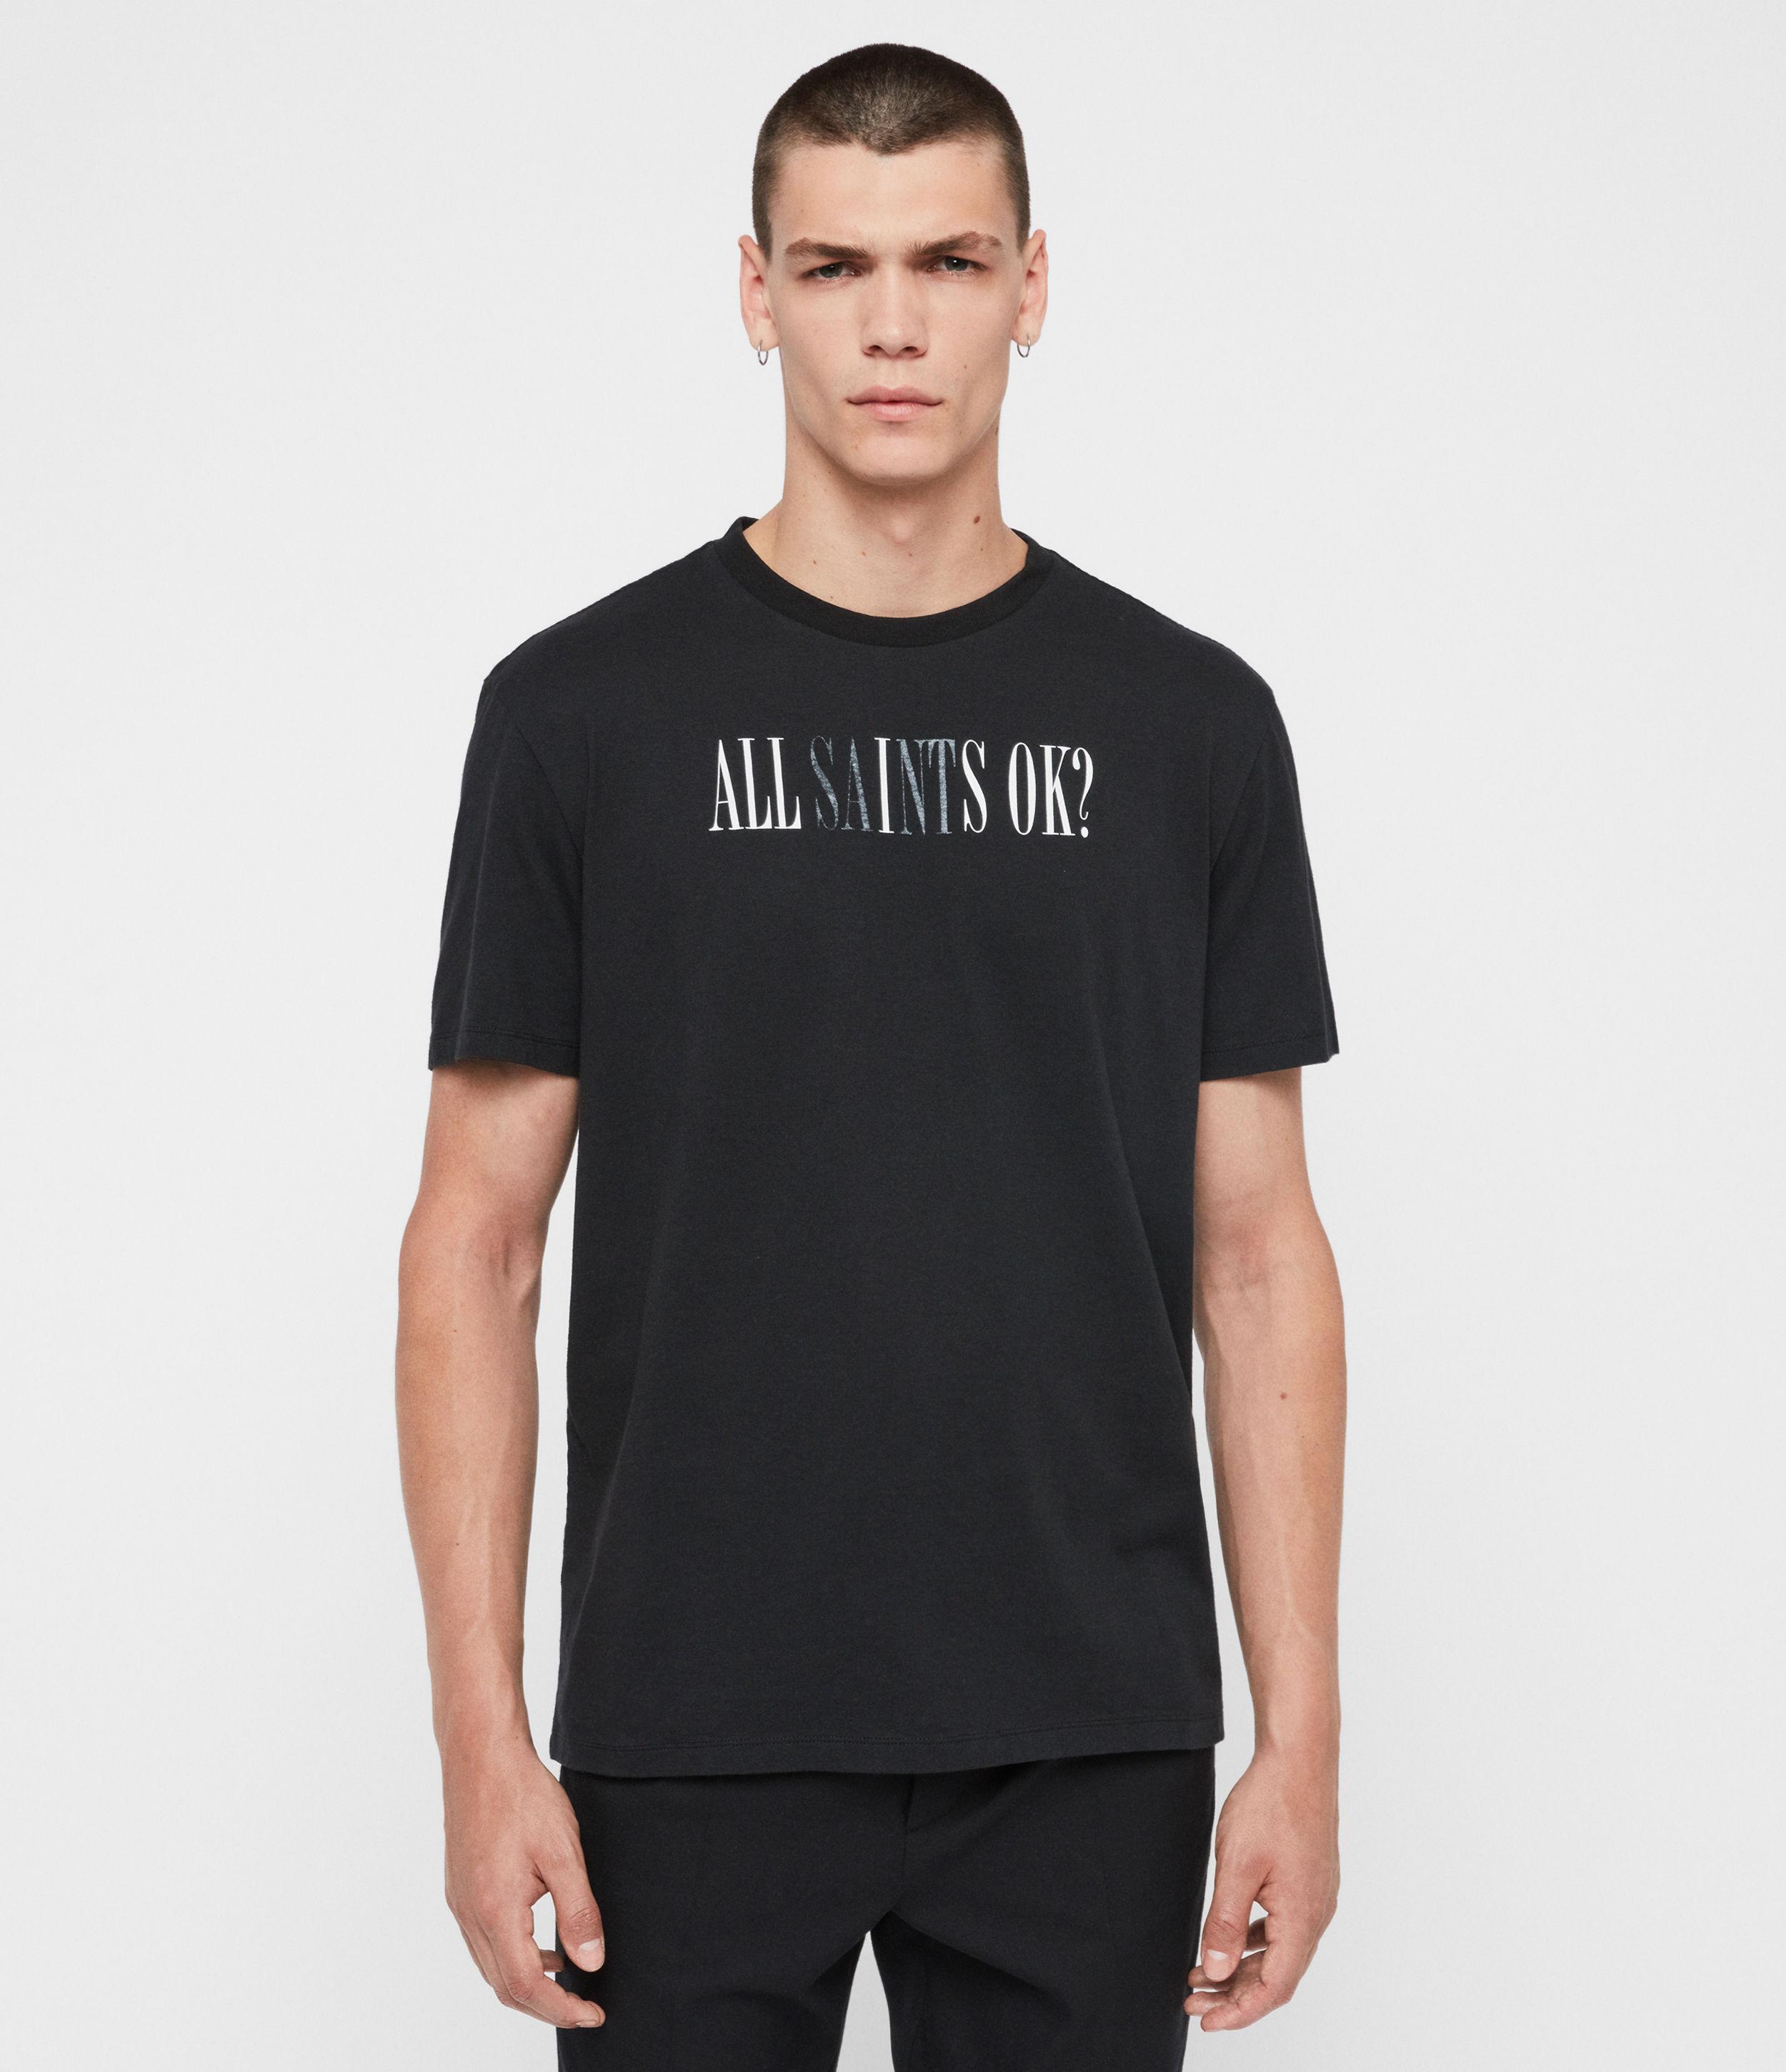 AllSaints Cotton Okay Crew T-shirt in Black for Men - Lyst